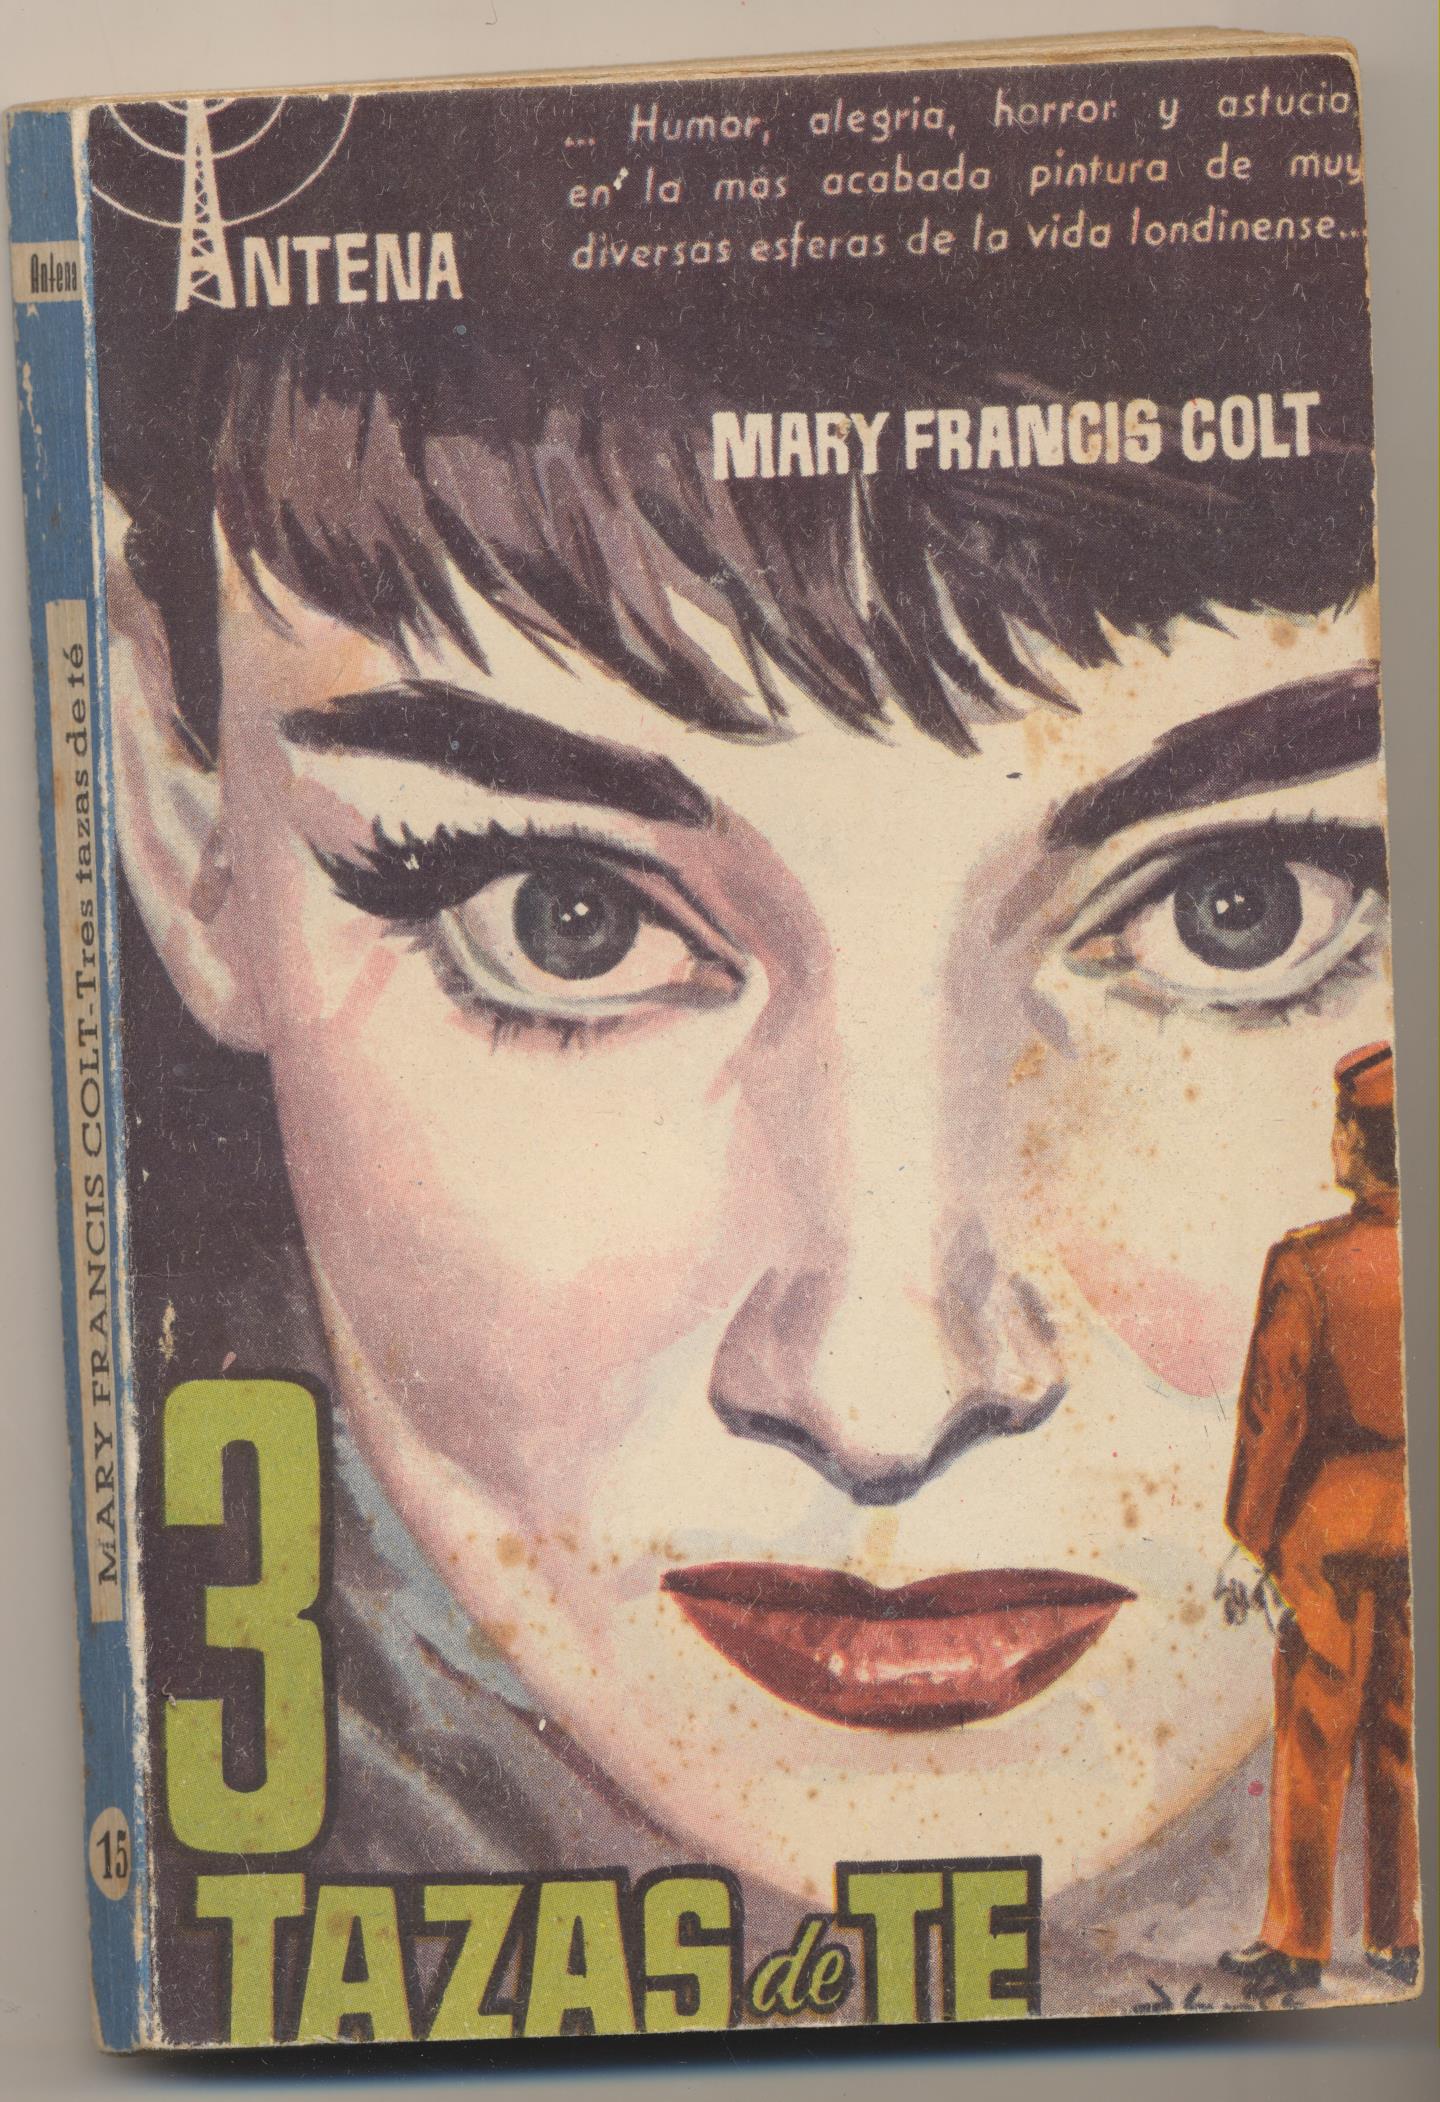 Colección Antena nº 15. 3 Tazas de te por Mary Francis Colt. 1ª Edición Julio 1957